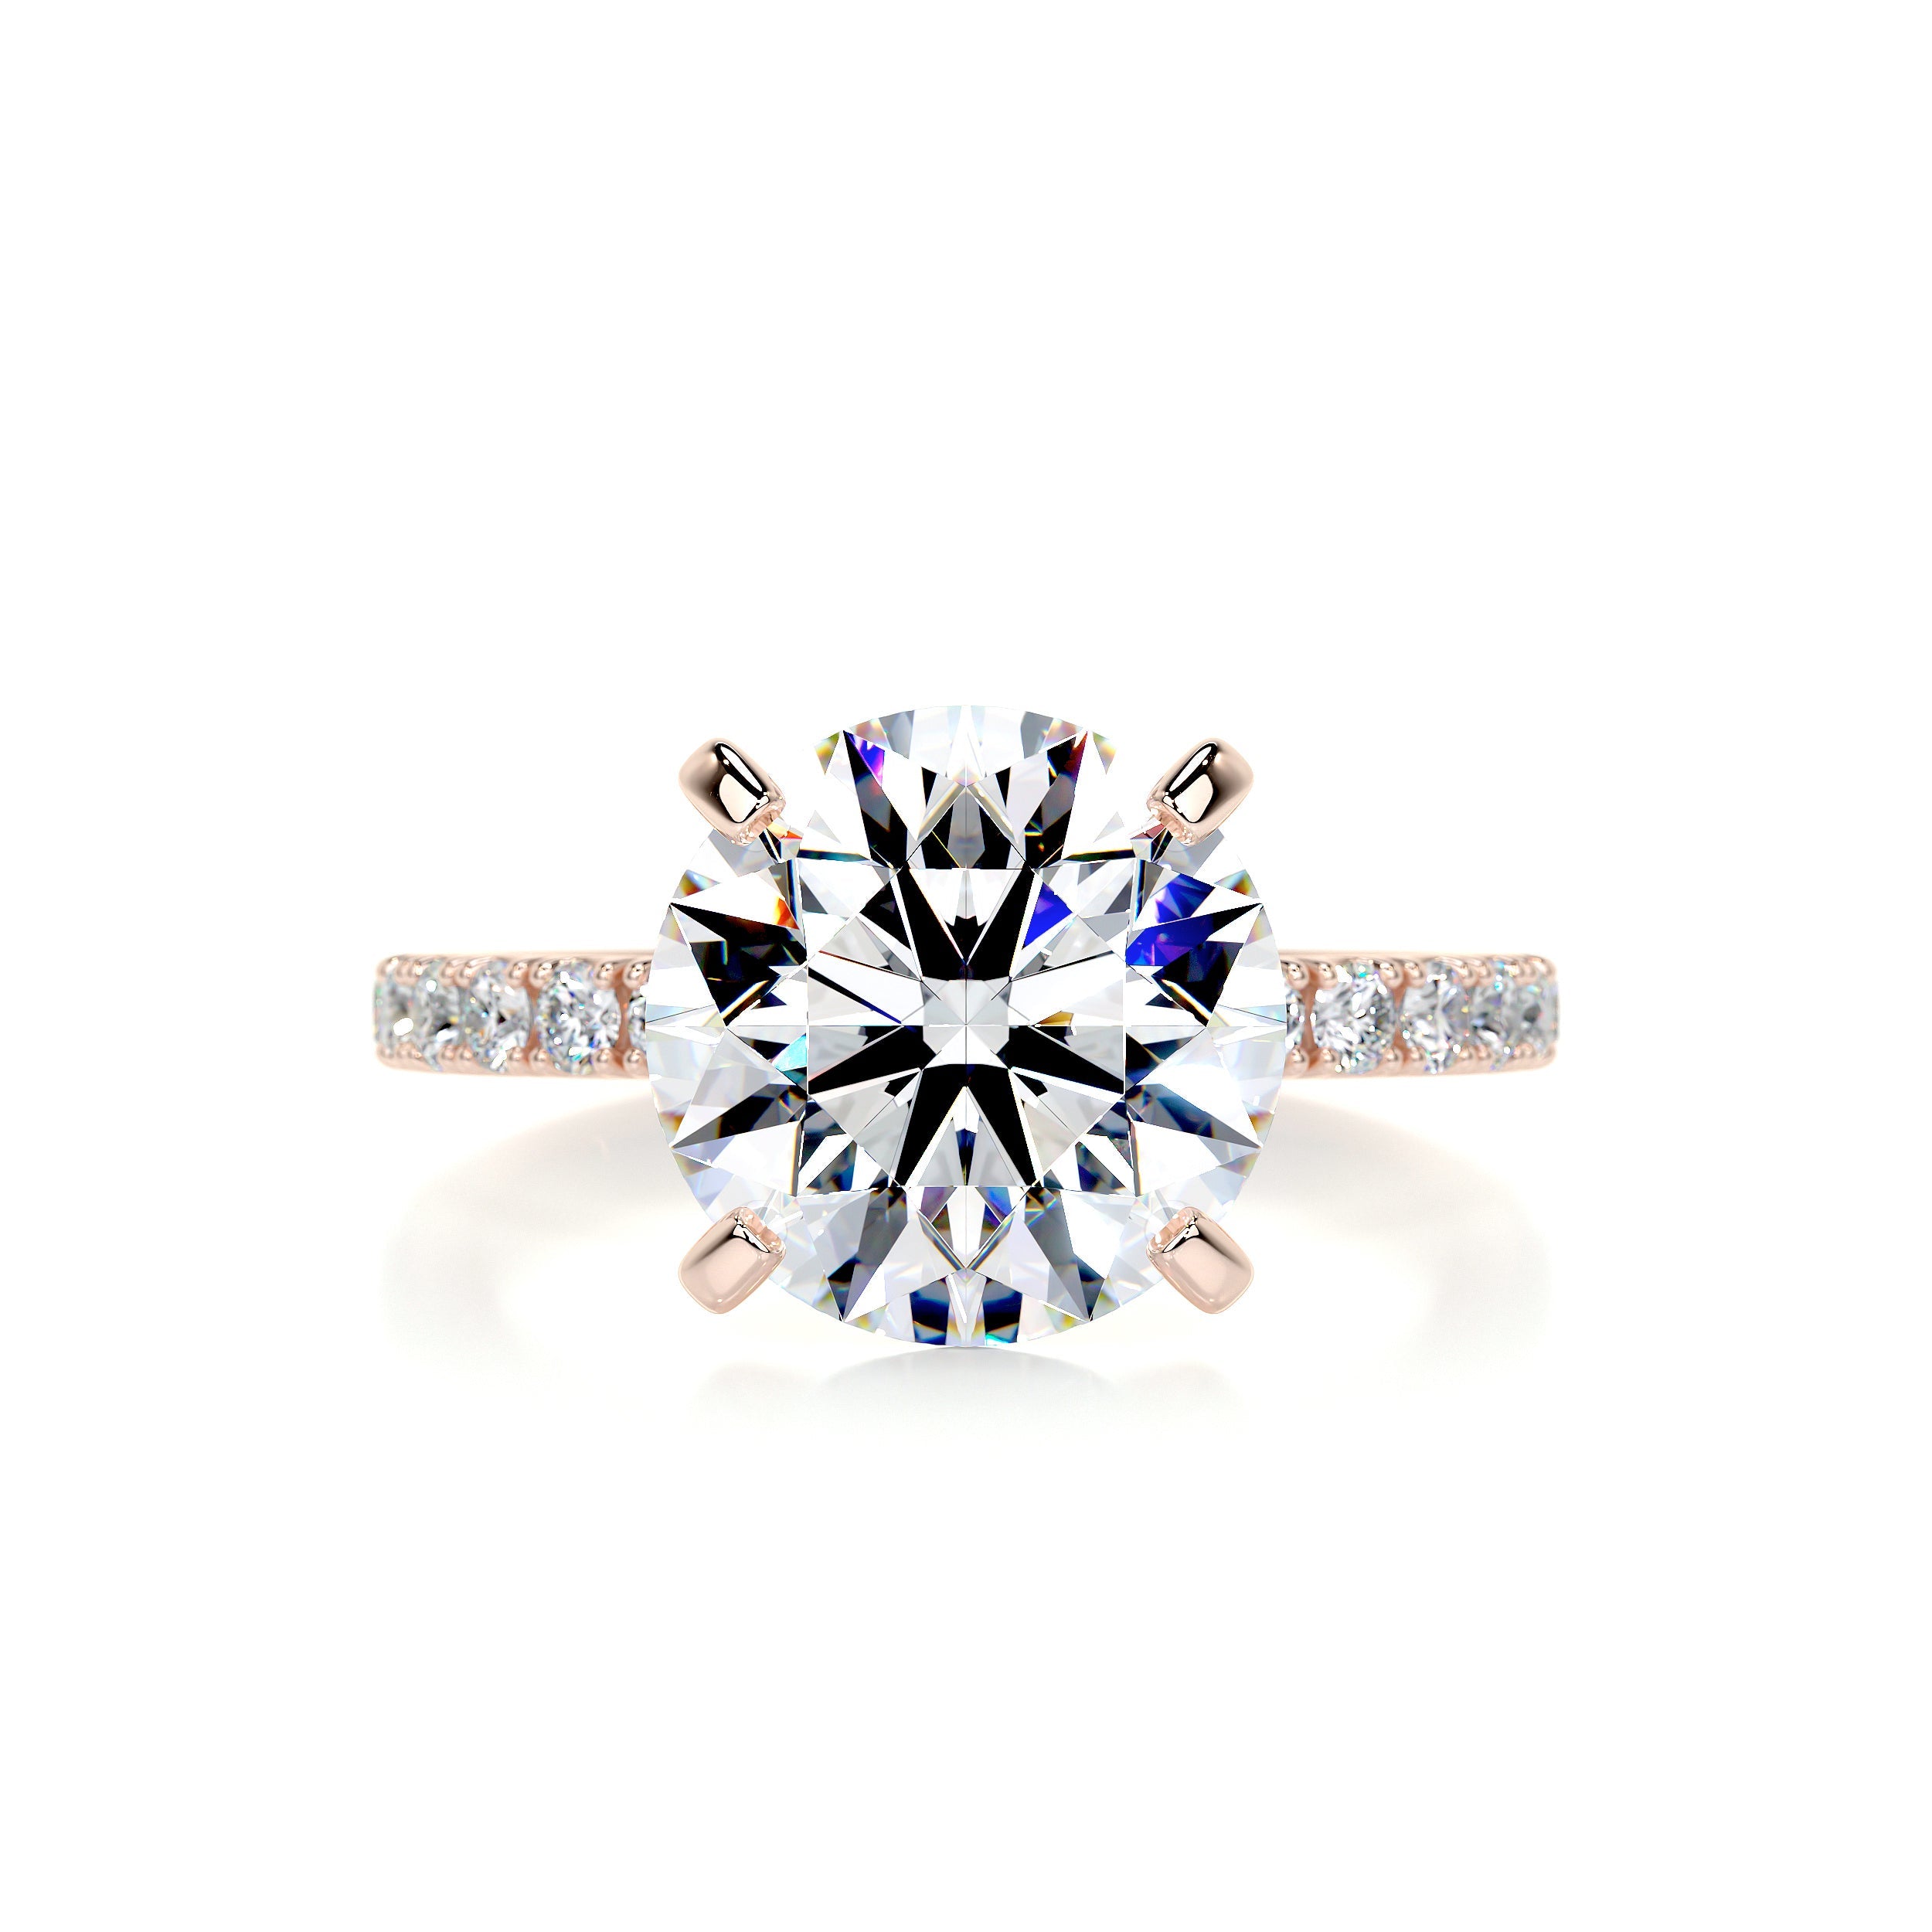 Alison Moissanite & Diamonds Ring   (5.5 Carat) -14K Rose Gold (RTS)